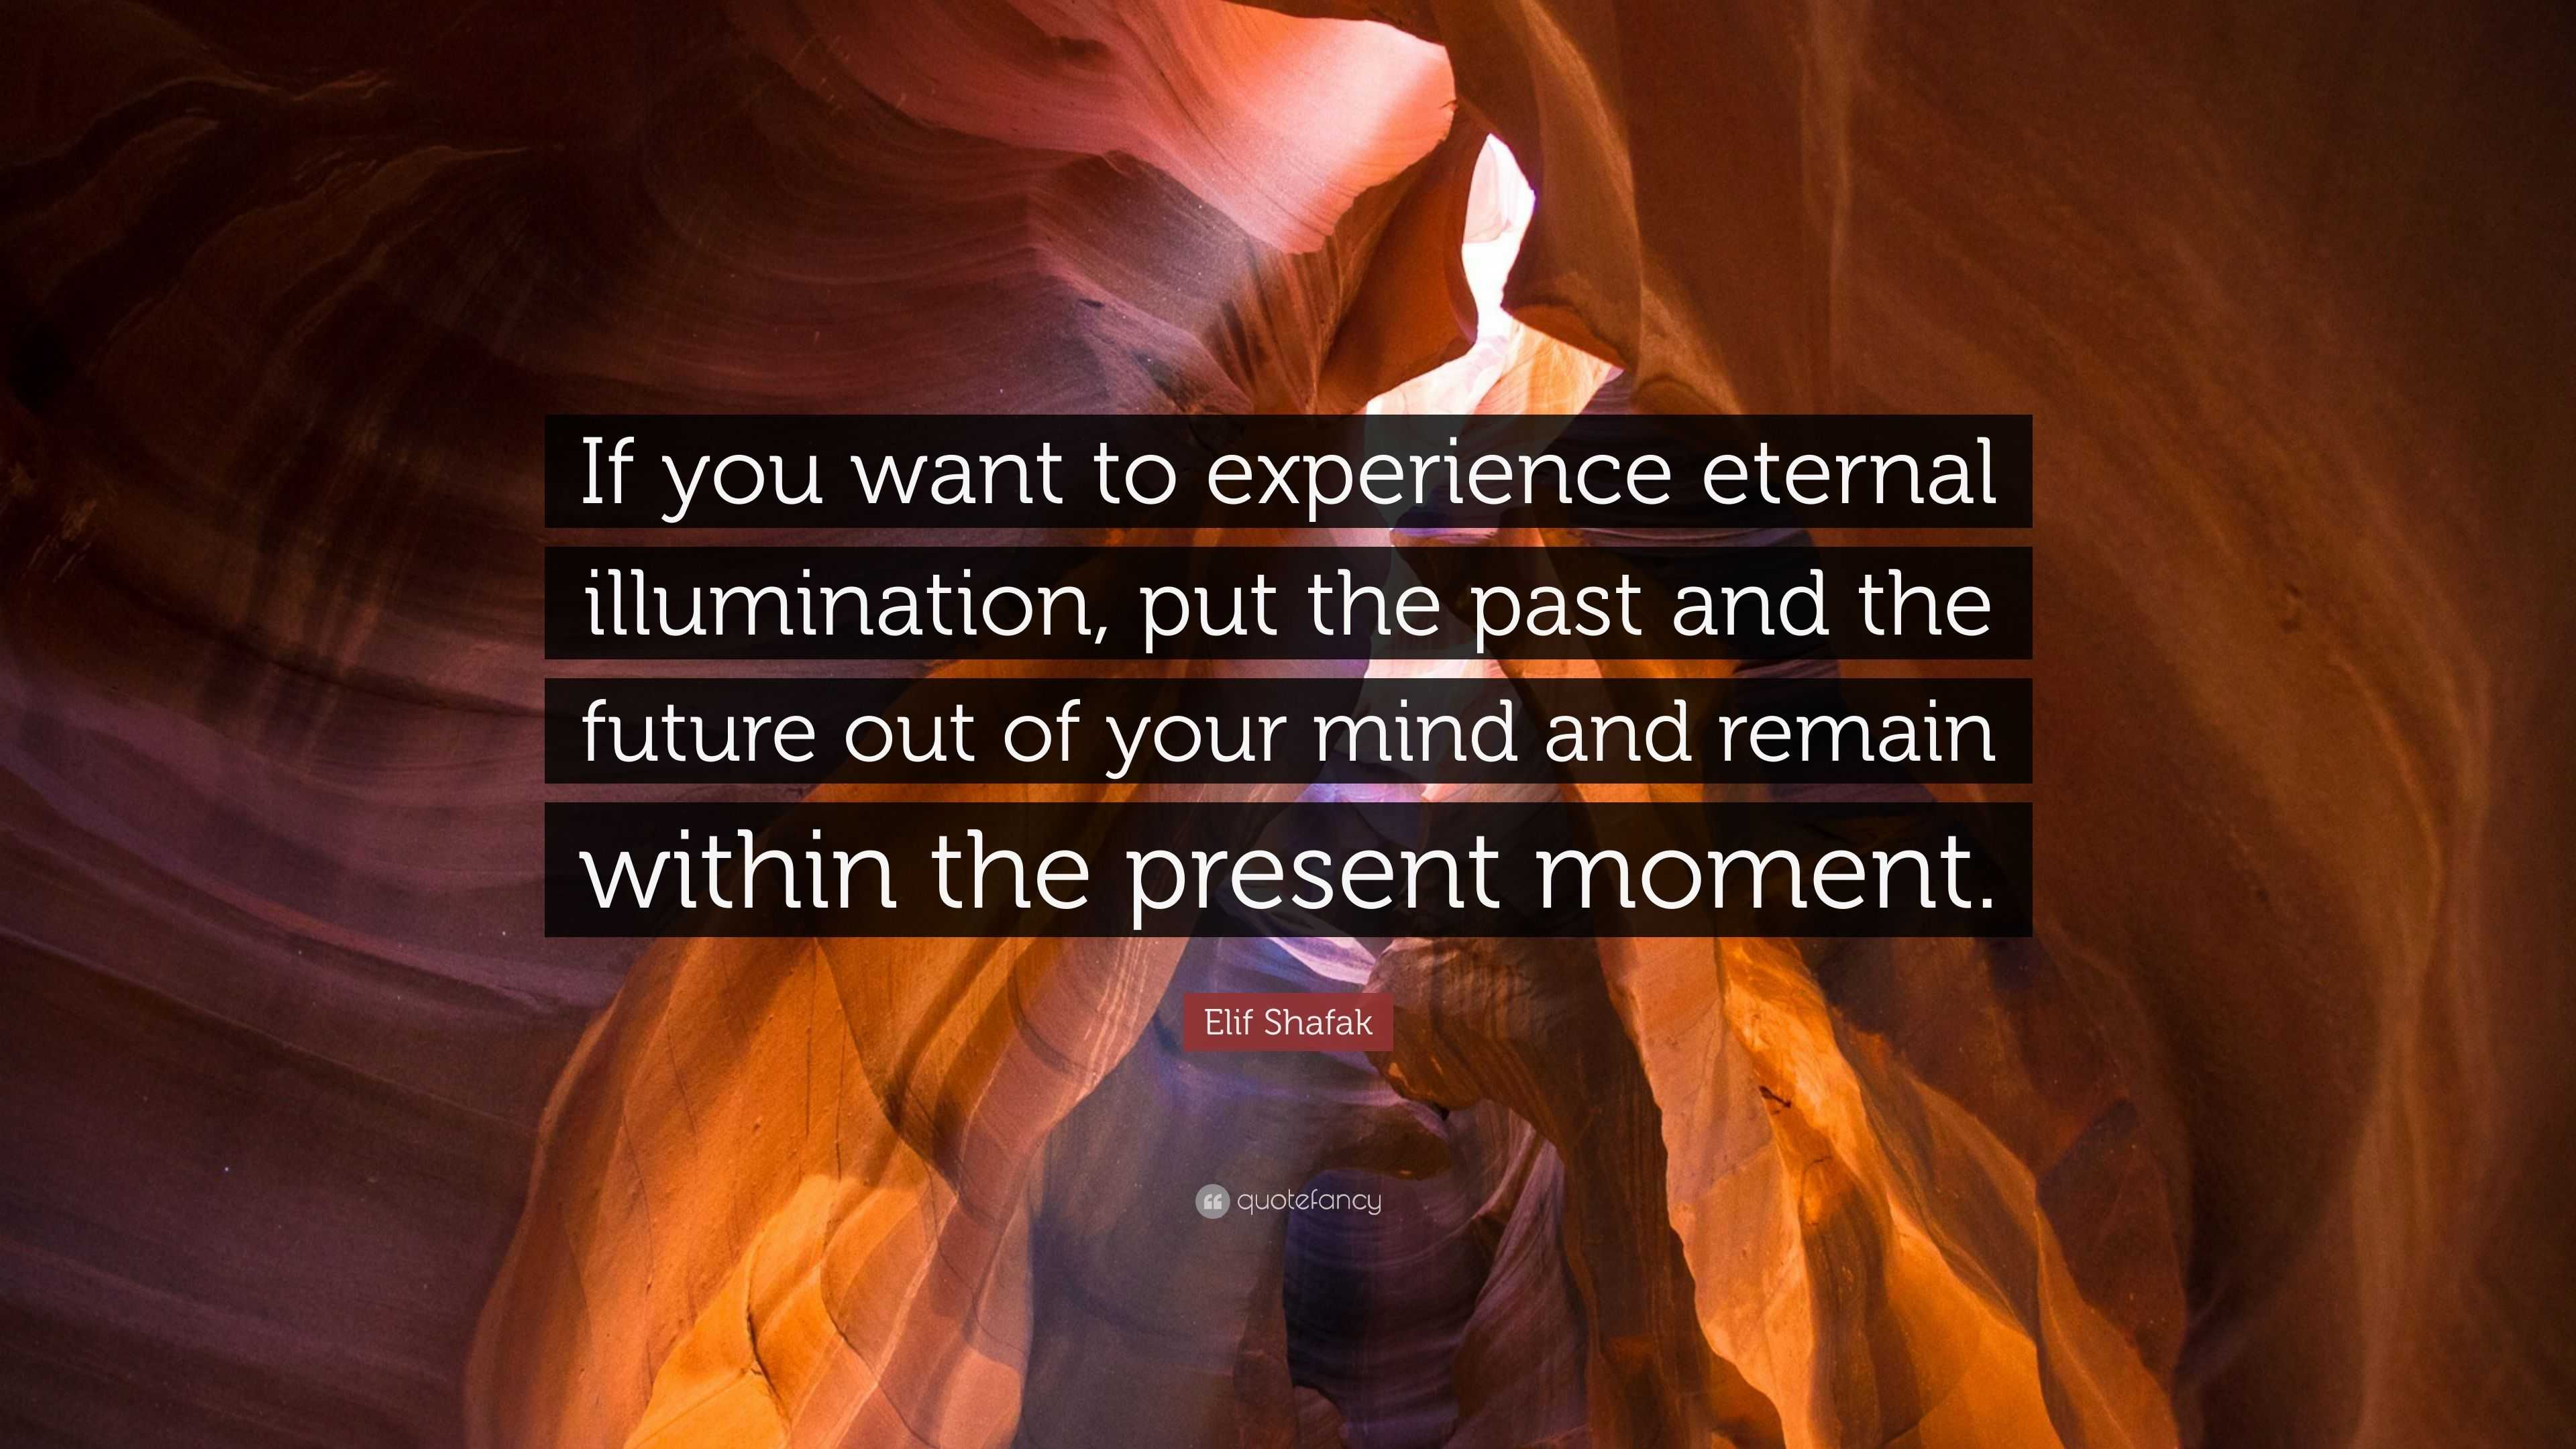 Elif Shafak Quote: “If you want to experience eternal illumination, put ...